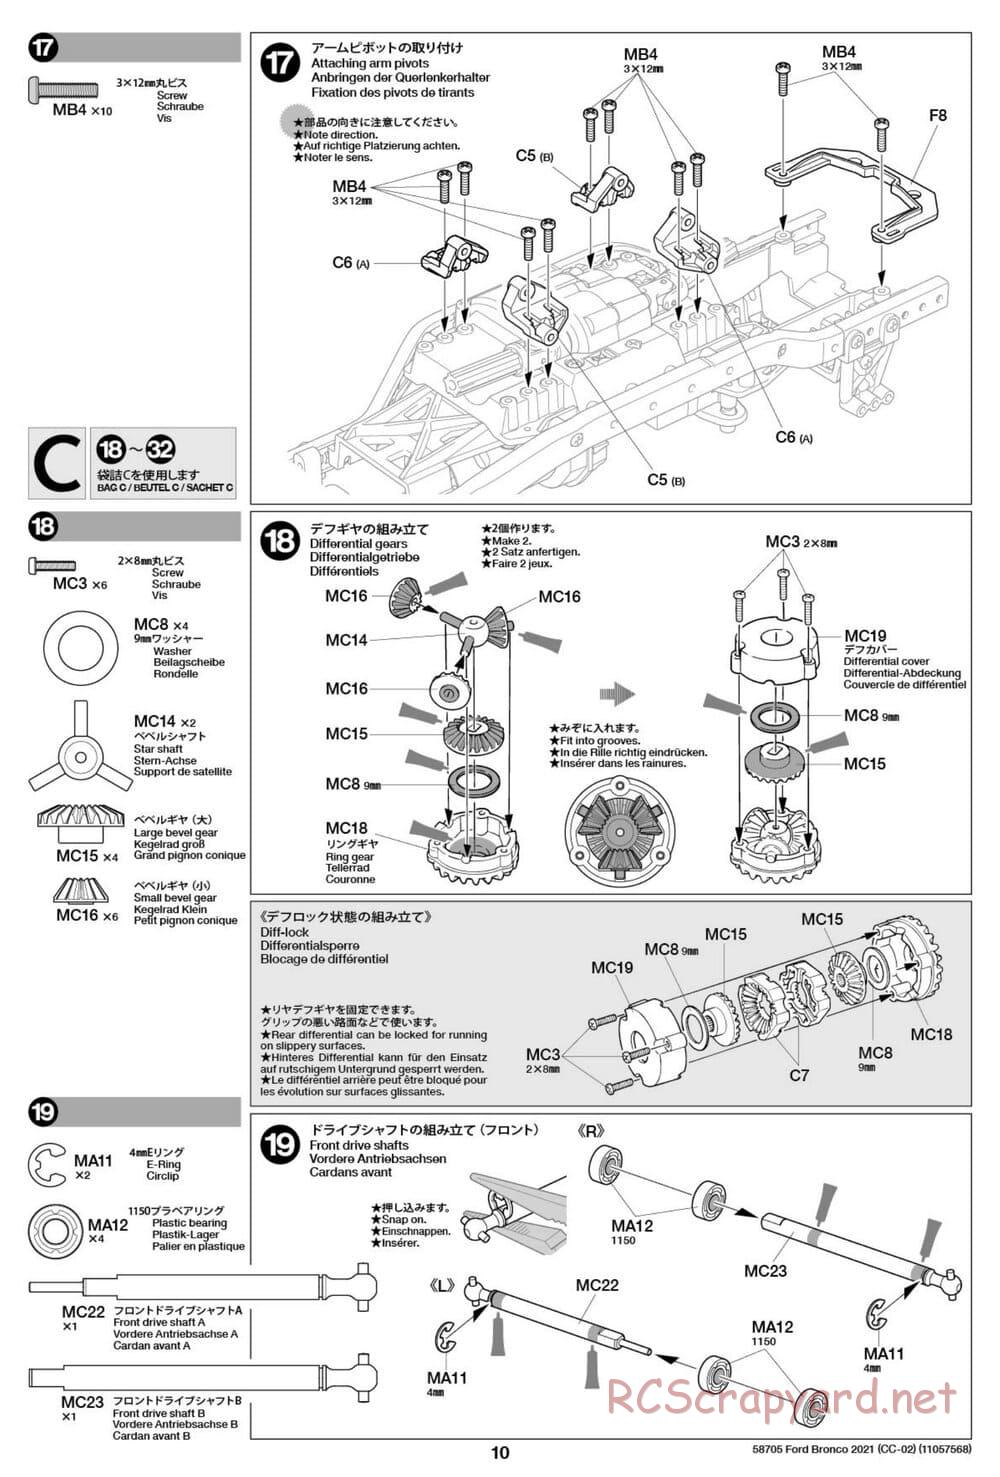 Tamiya - Ford Bronco 2021 - CC-02 Chassis - Manual - Page 10